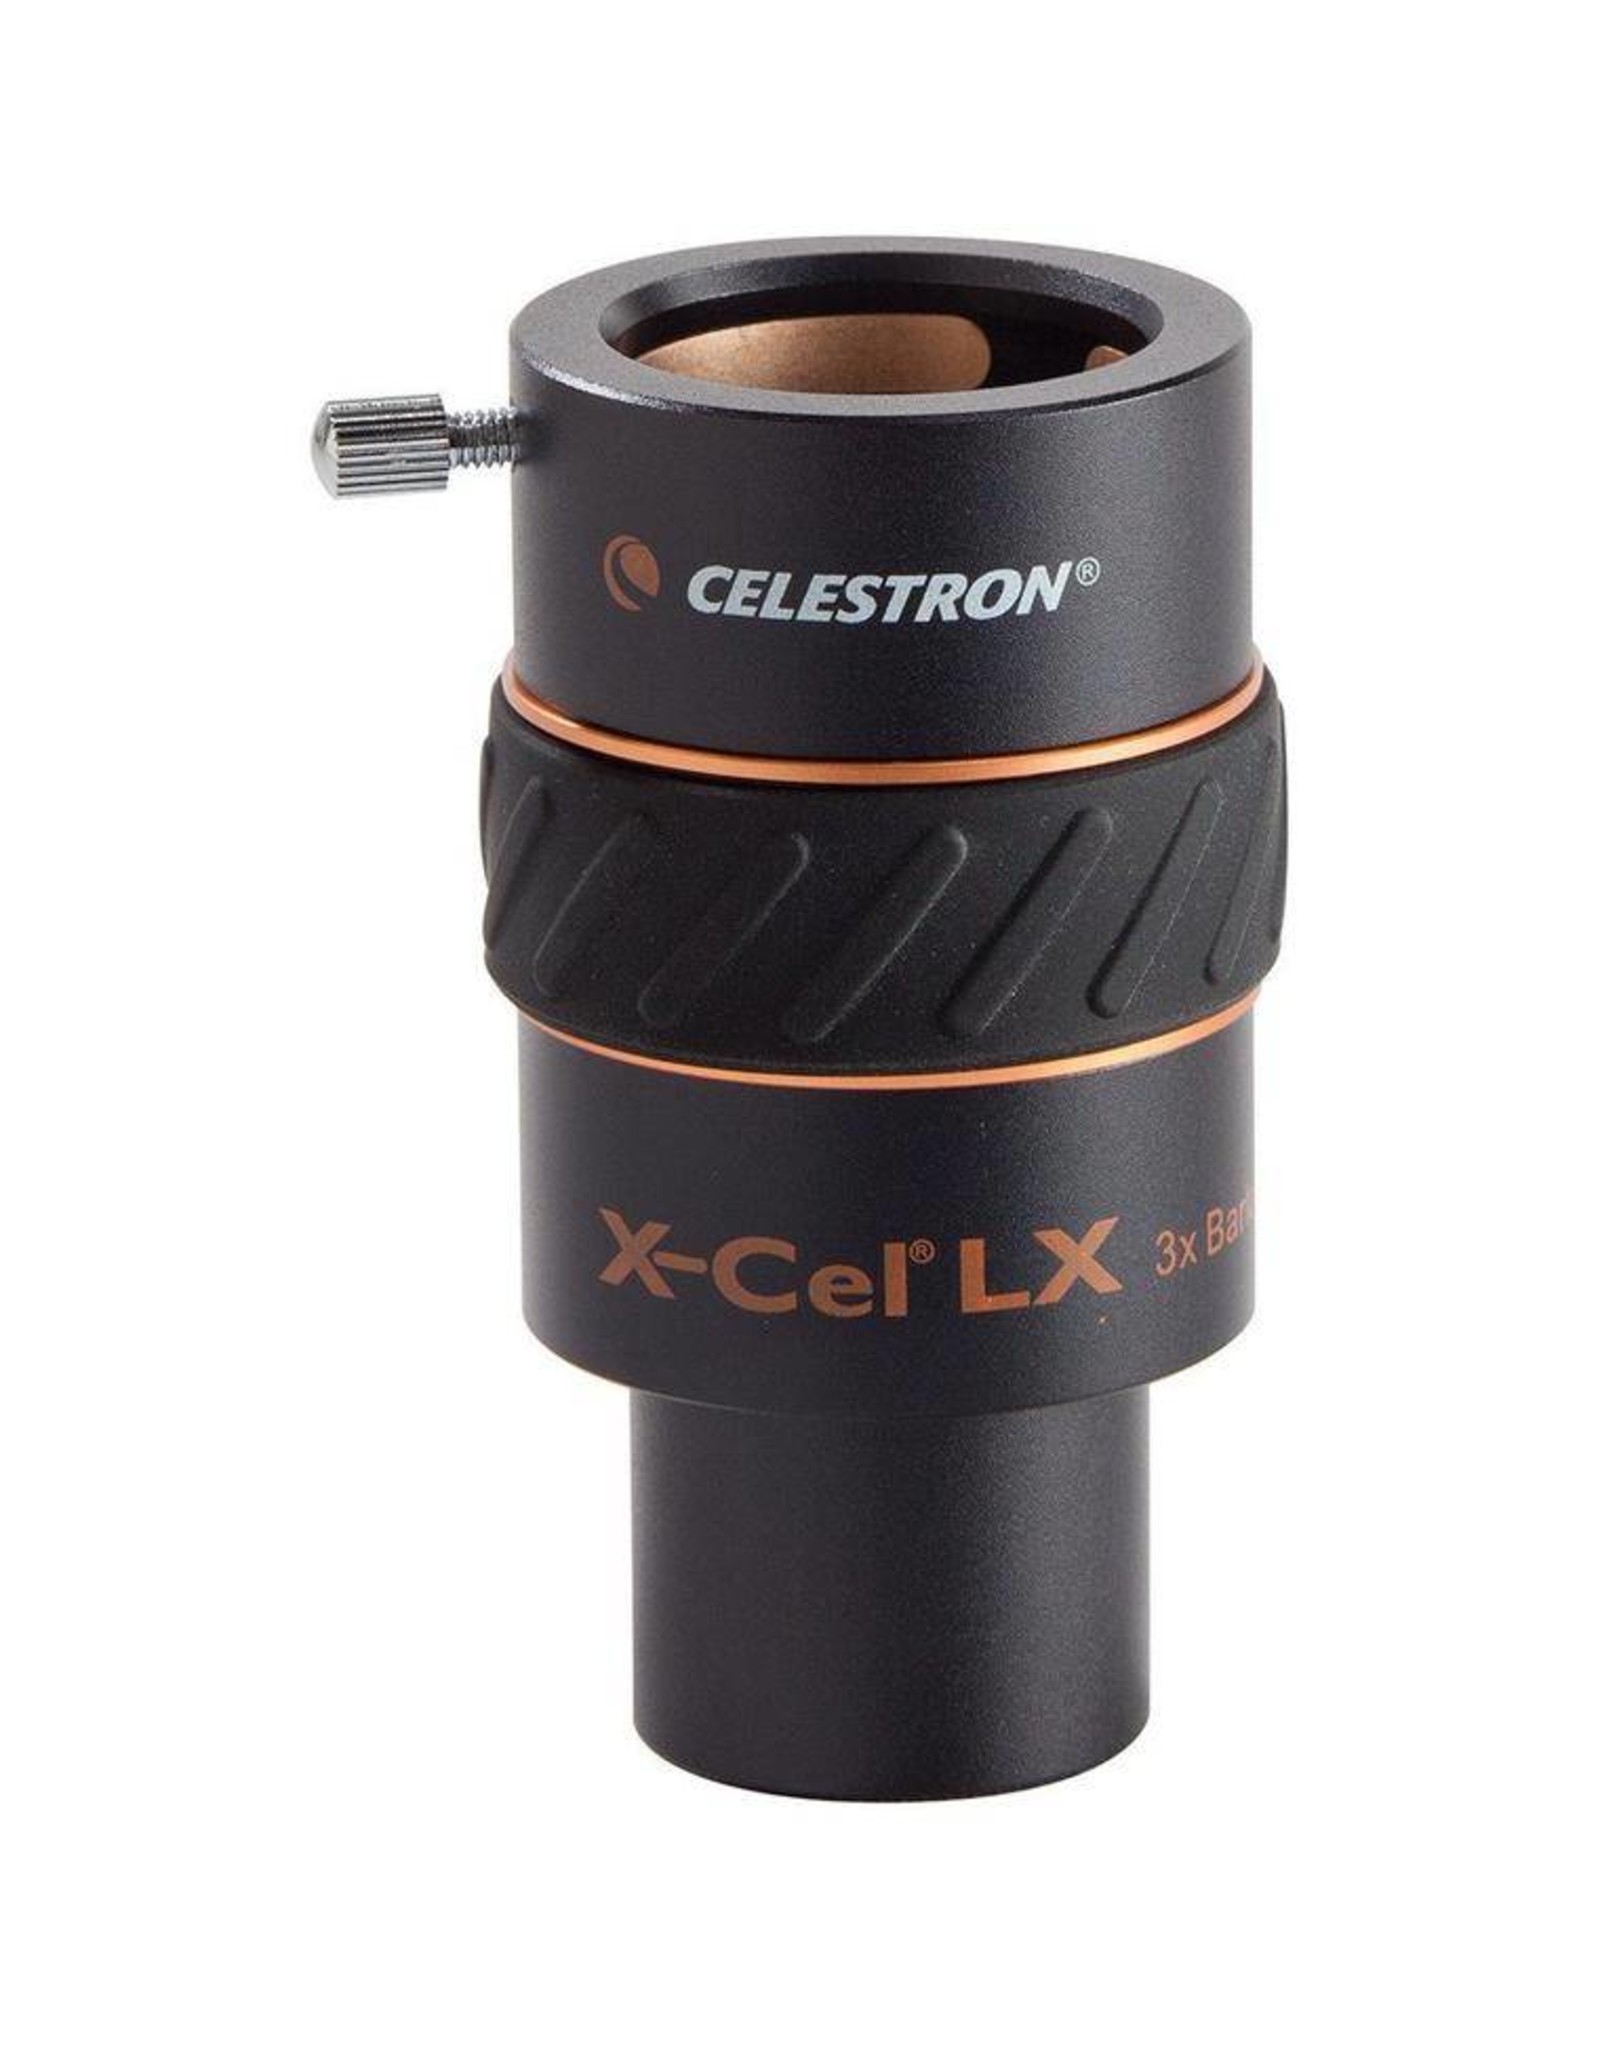 Celestron Celestron X-Cel LX 3x 1.25 Barlow